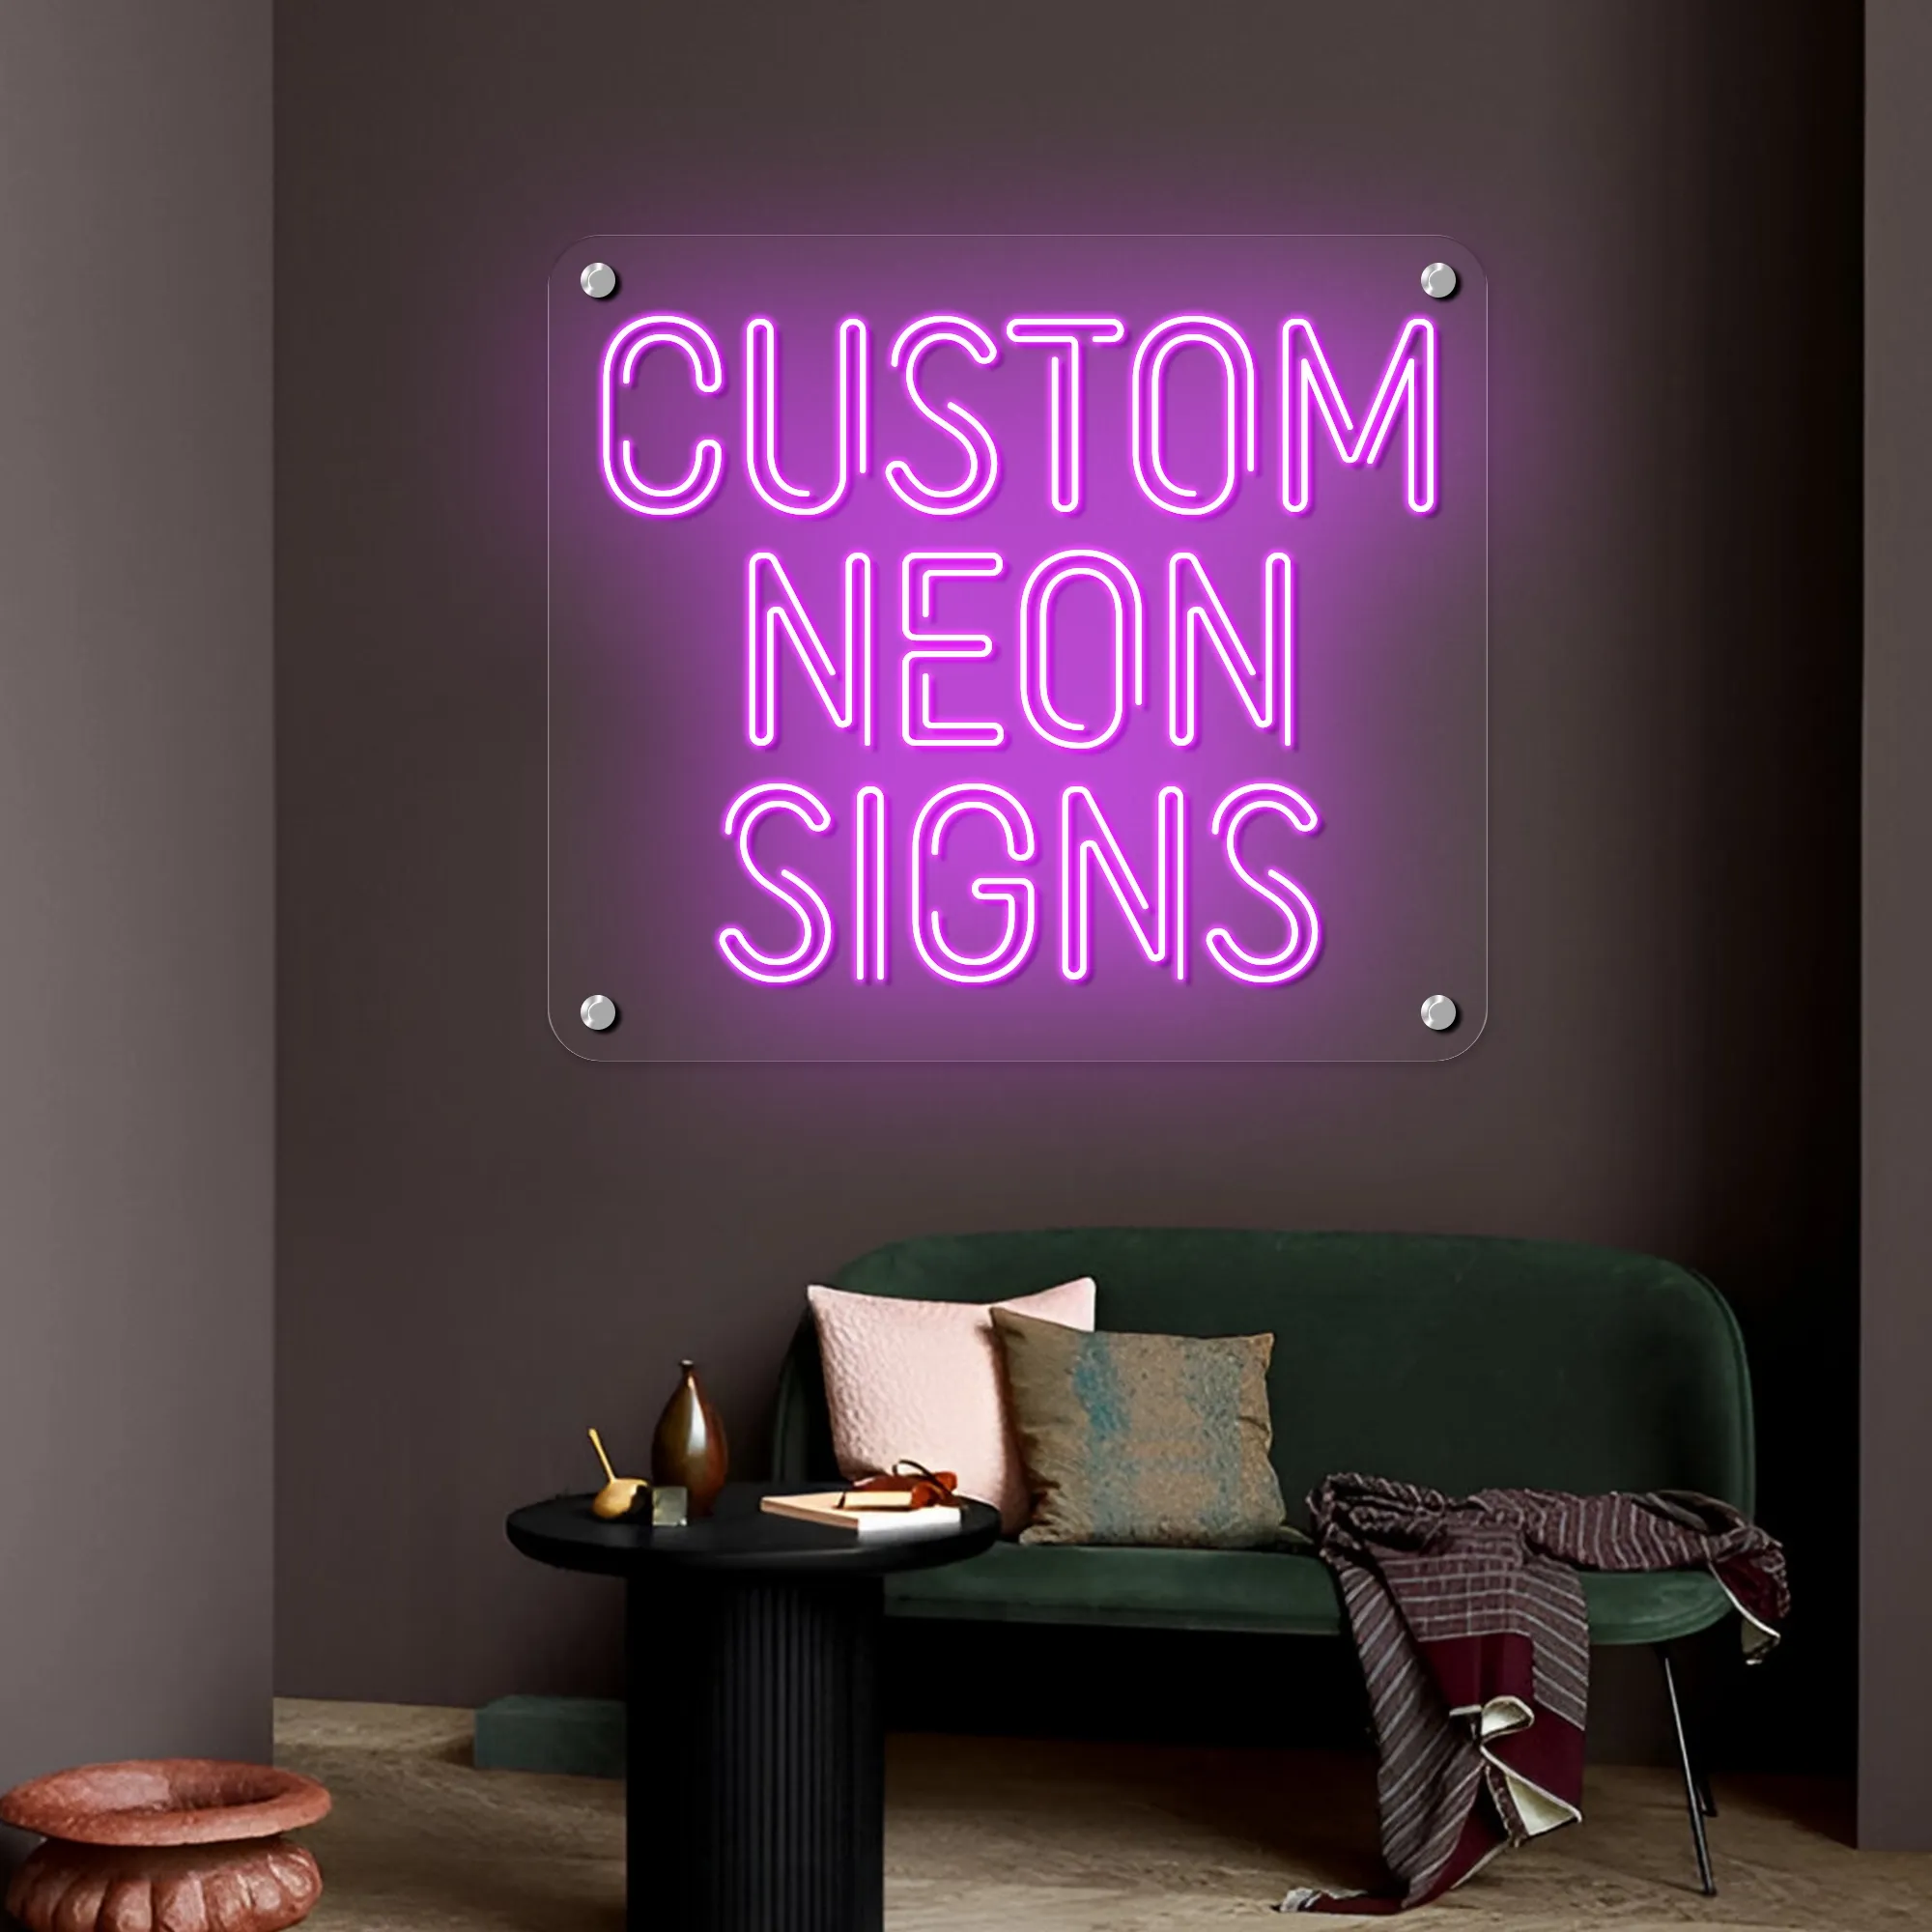 Neon Signs - Australia Promo Now